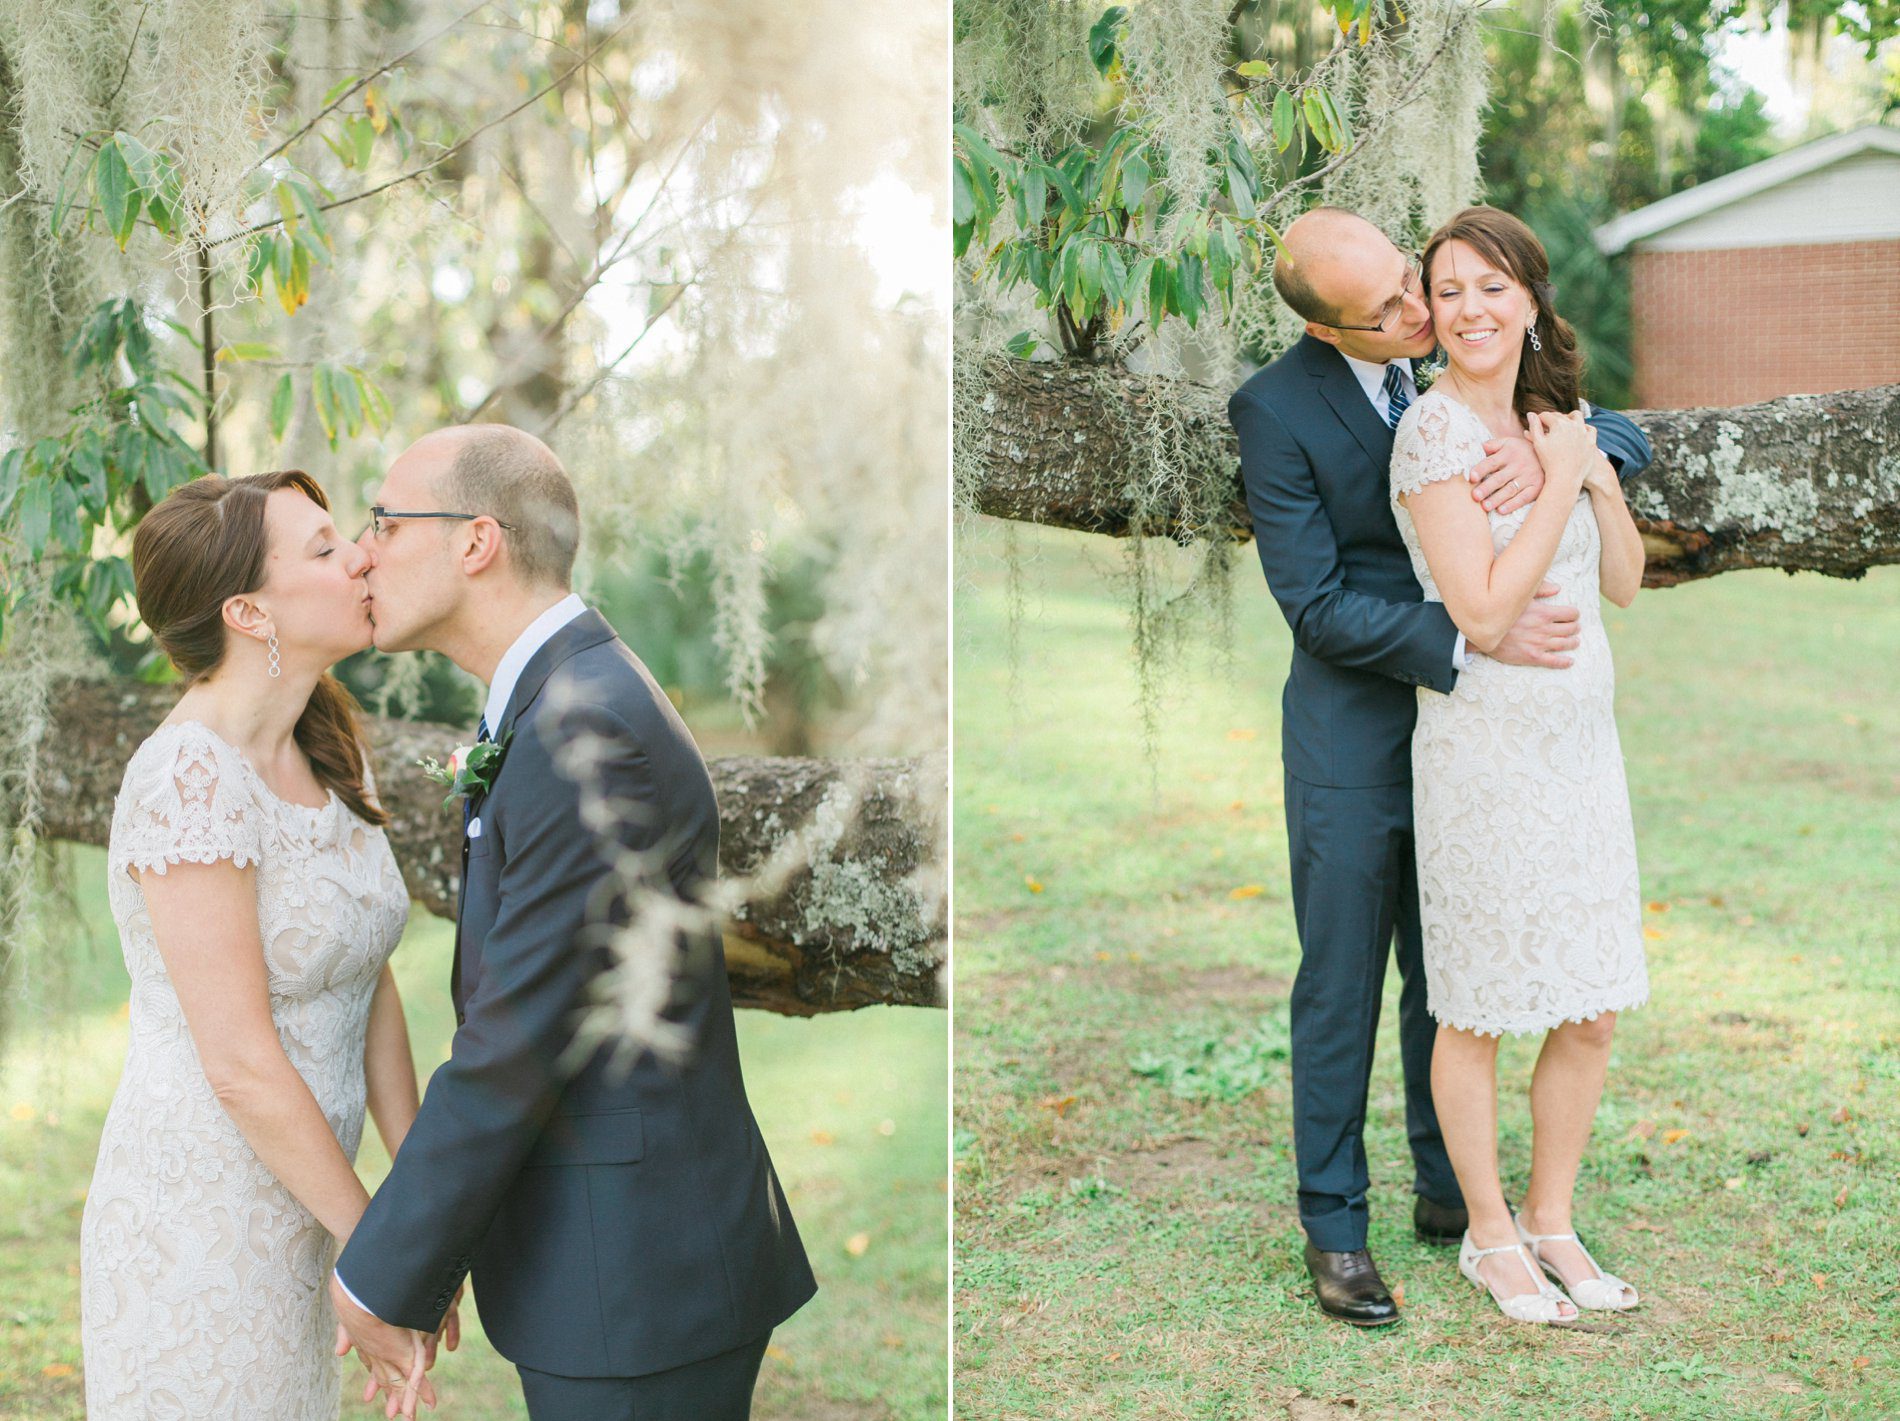 Wedding portraits under spanish moss covered tree in South Carolina